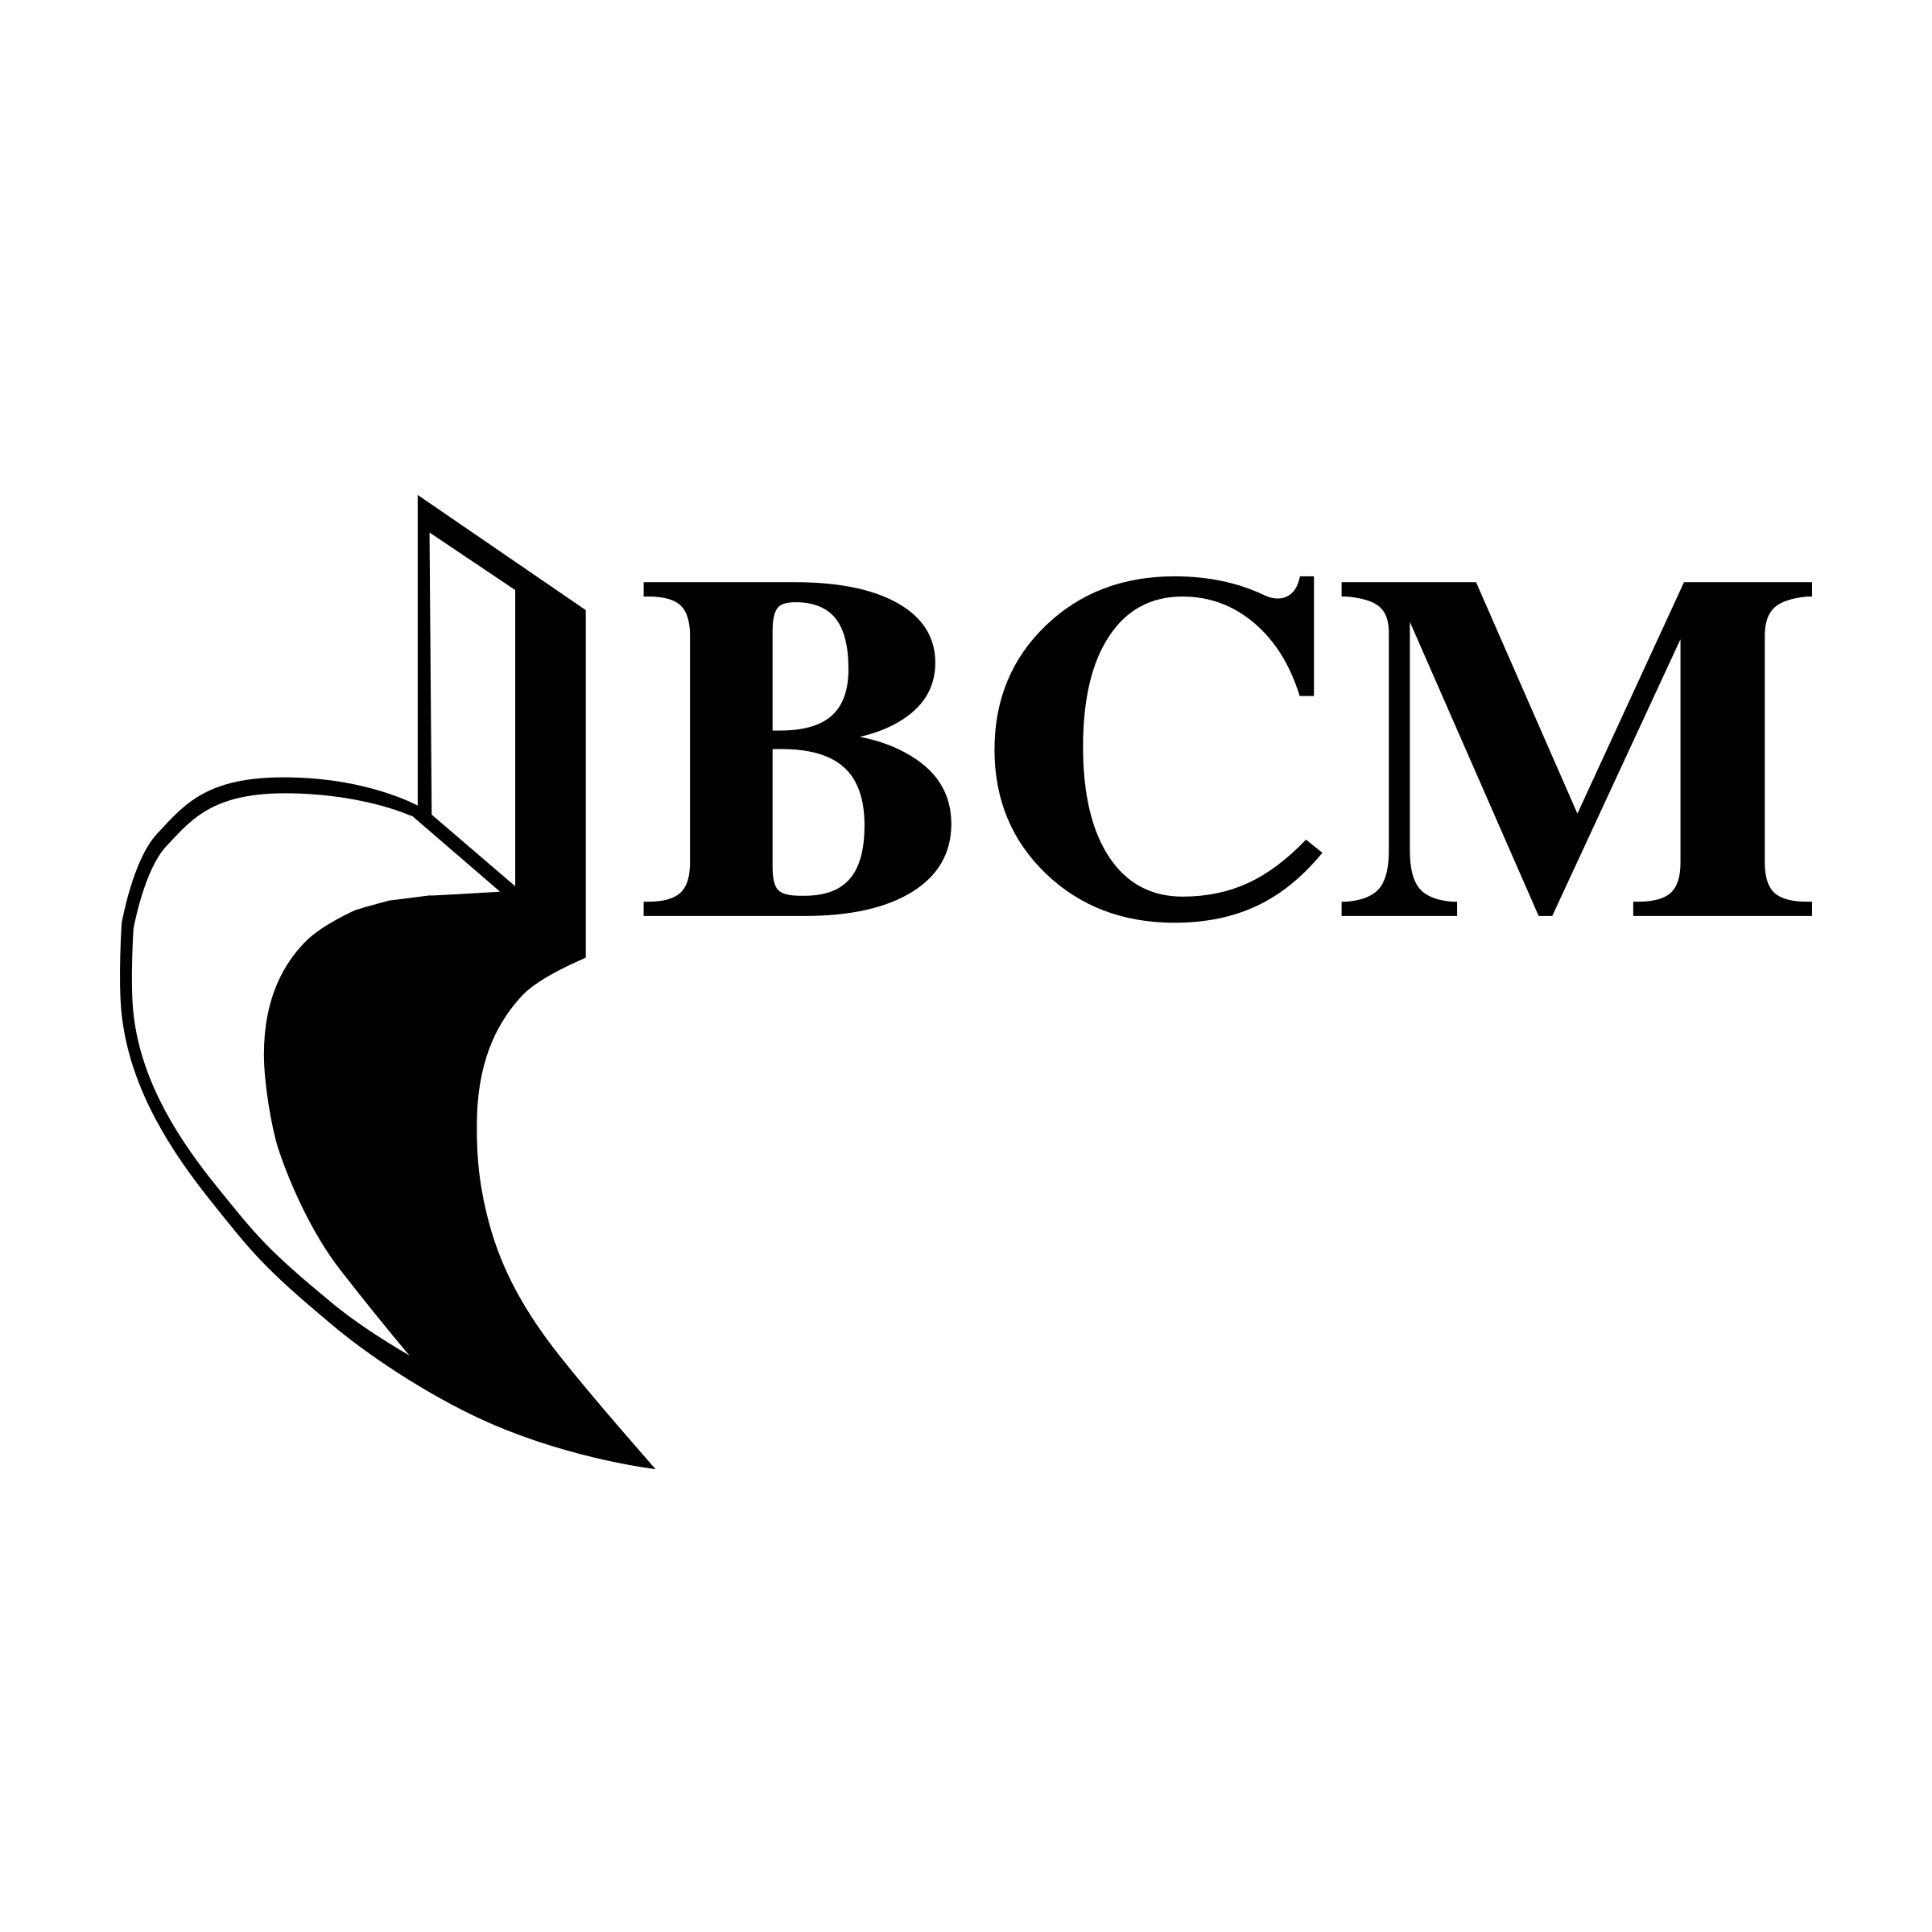 BCM Logo - BCM Logo PNG Transparent & SVG Vector - Freebie Supply